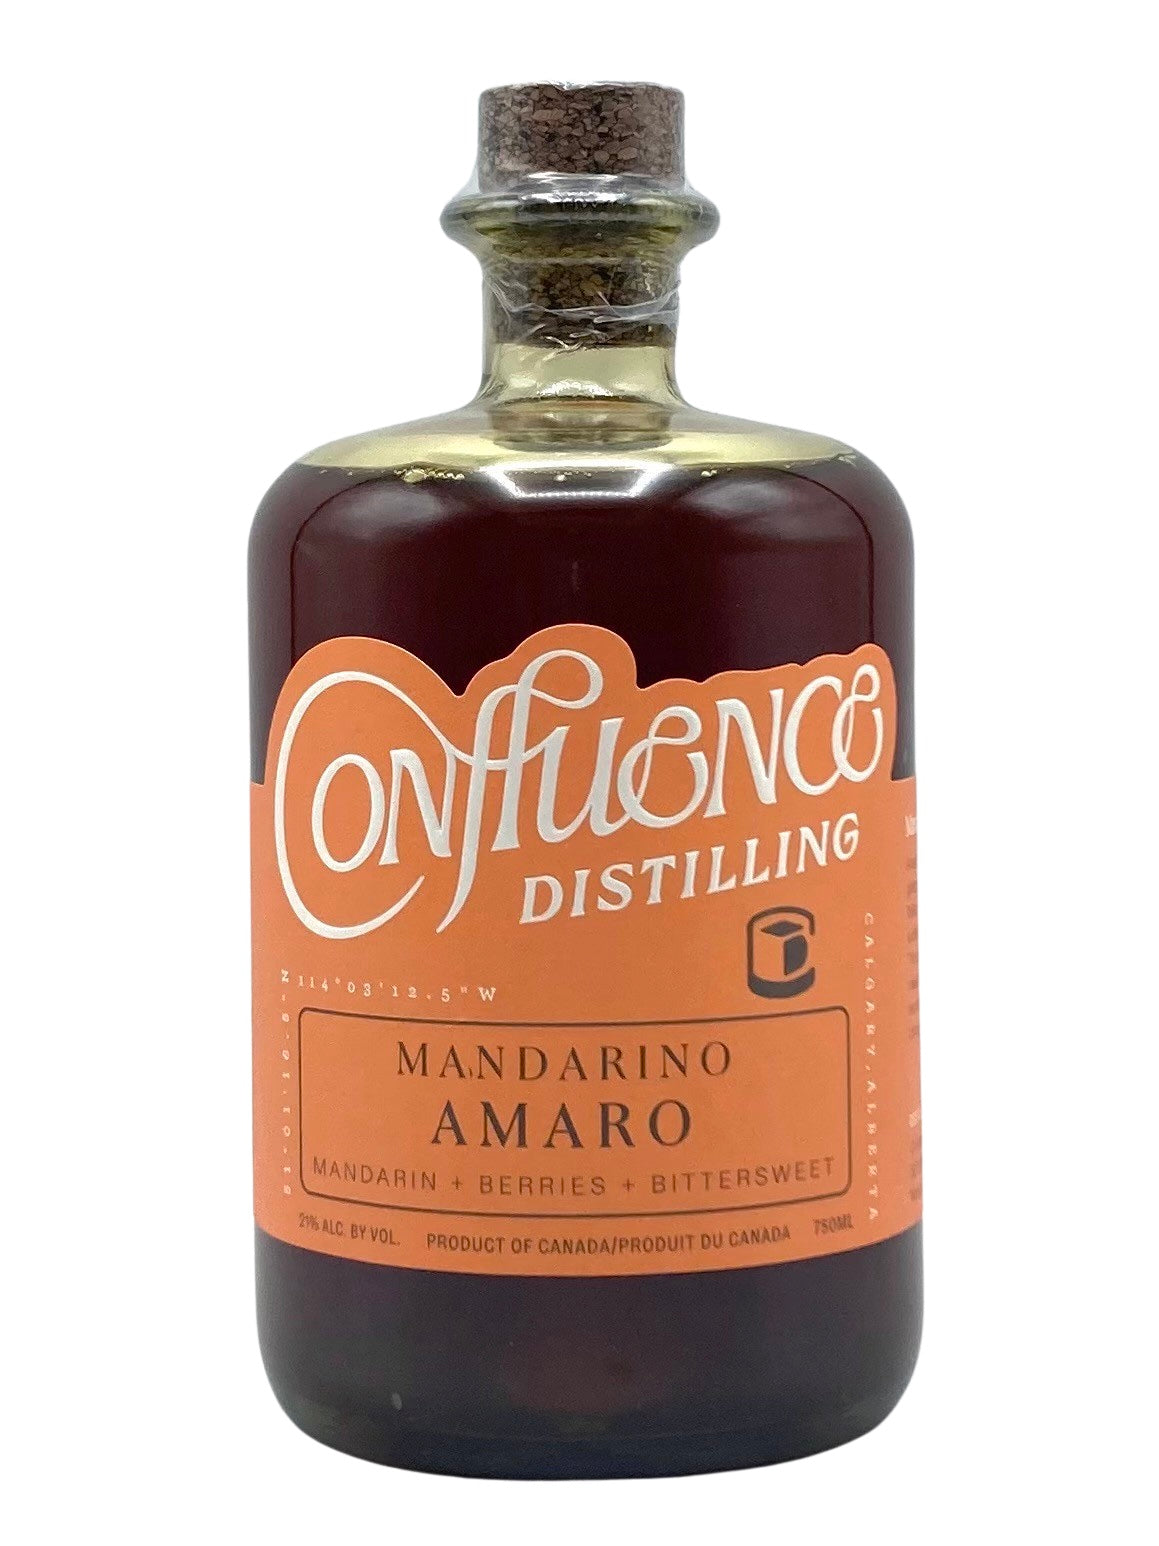 Confluence Mandarino Amaro